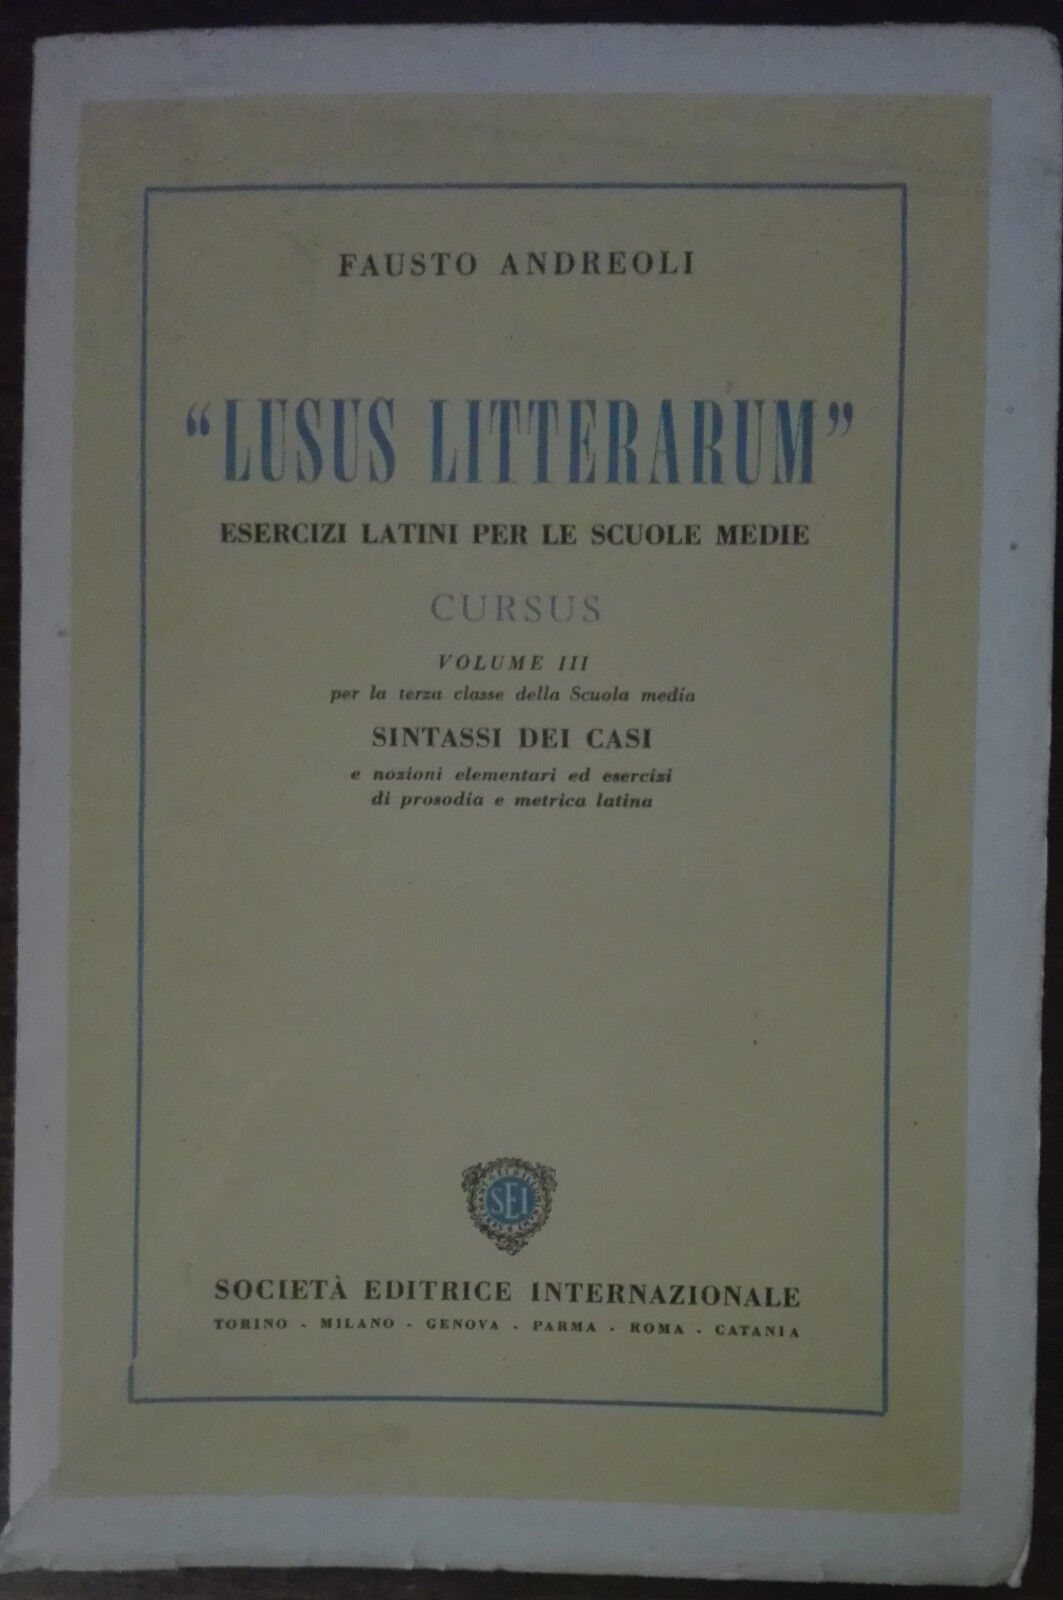 Lusus litterarum - Fausto Andreoli - Societ? editrice internazionale,1953 - A